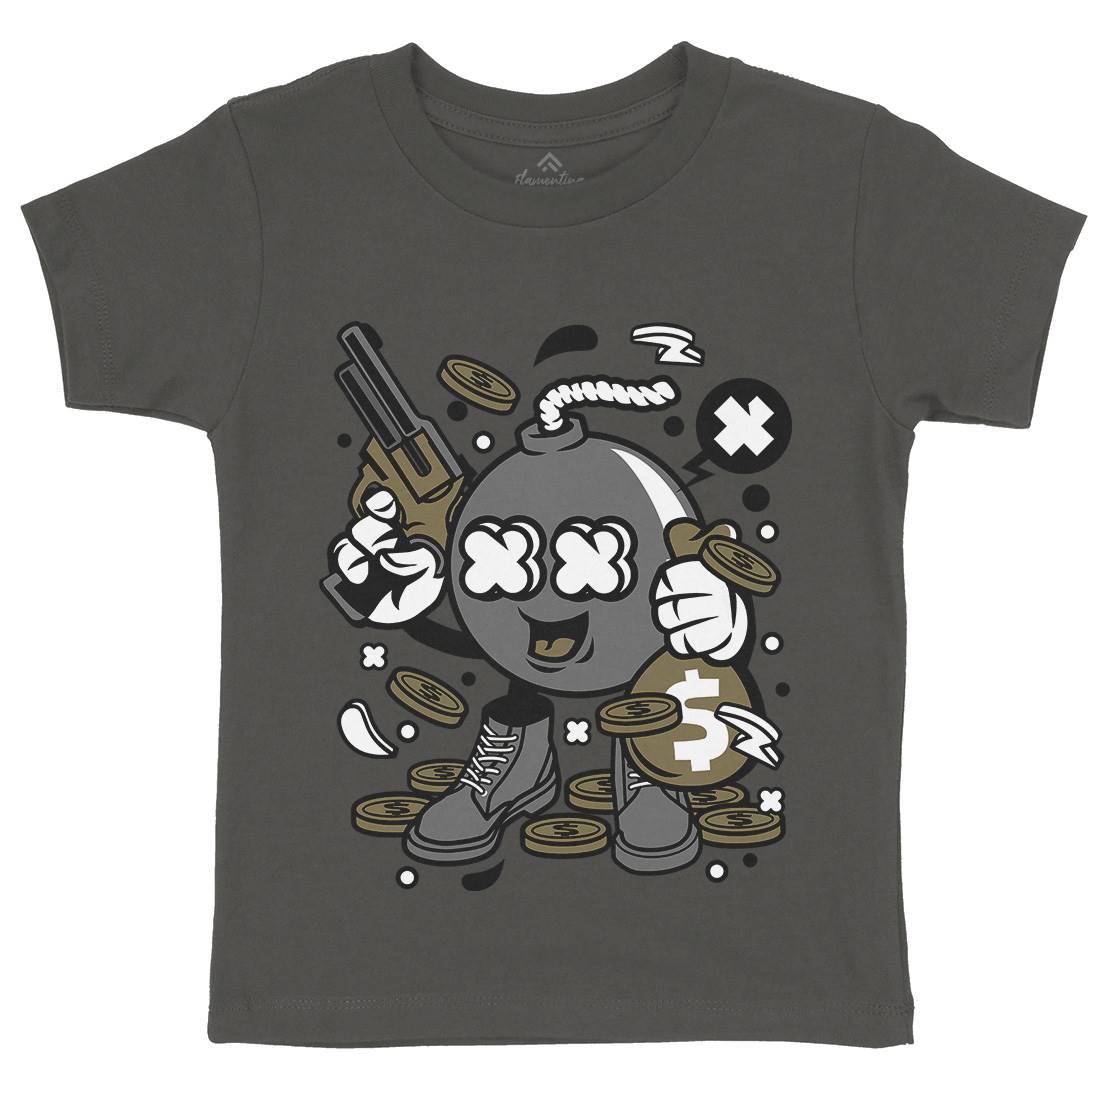 Money Takers Bomb Kids Crew Neck T-Shirt Retro C173